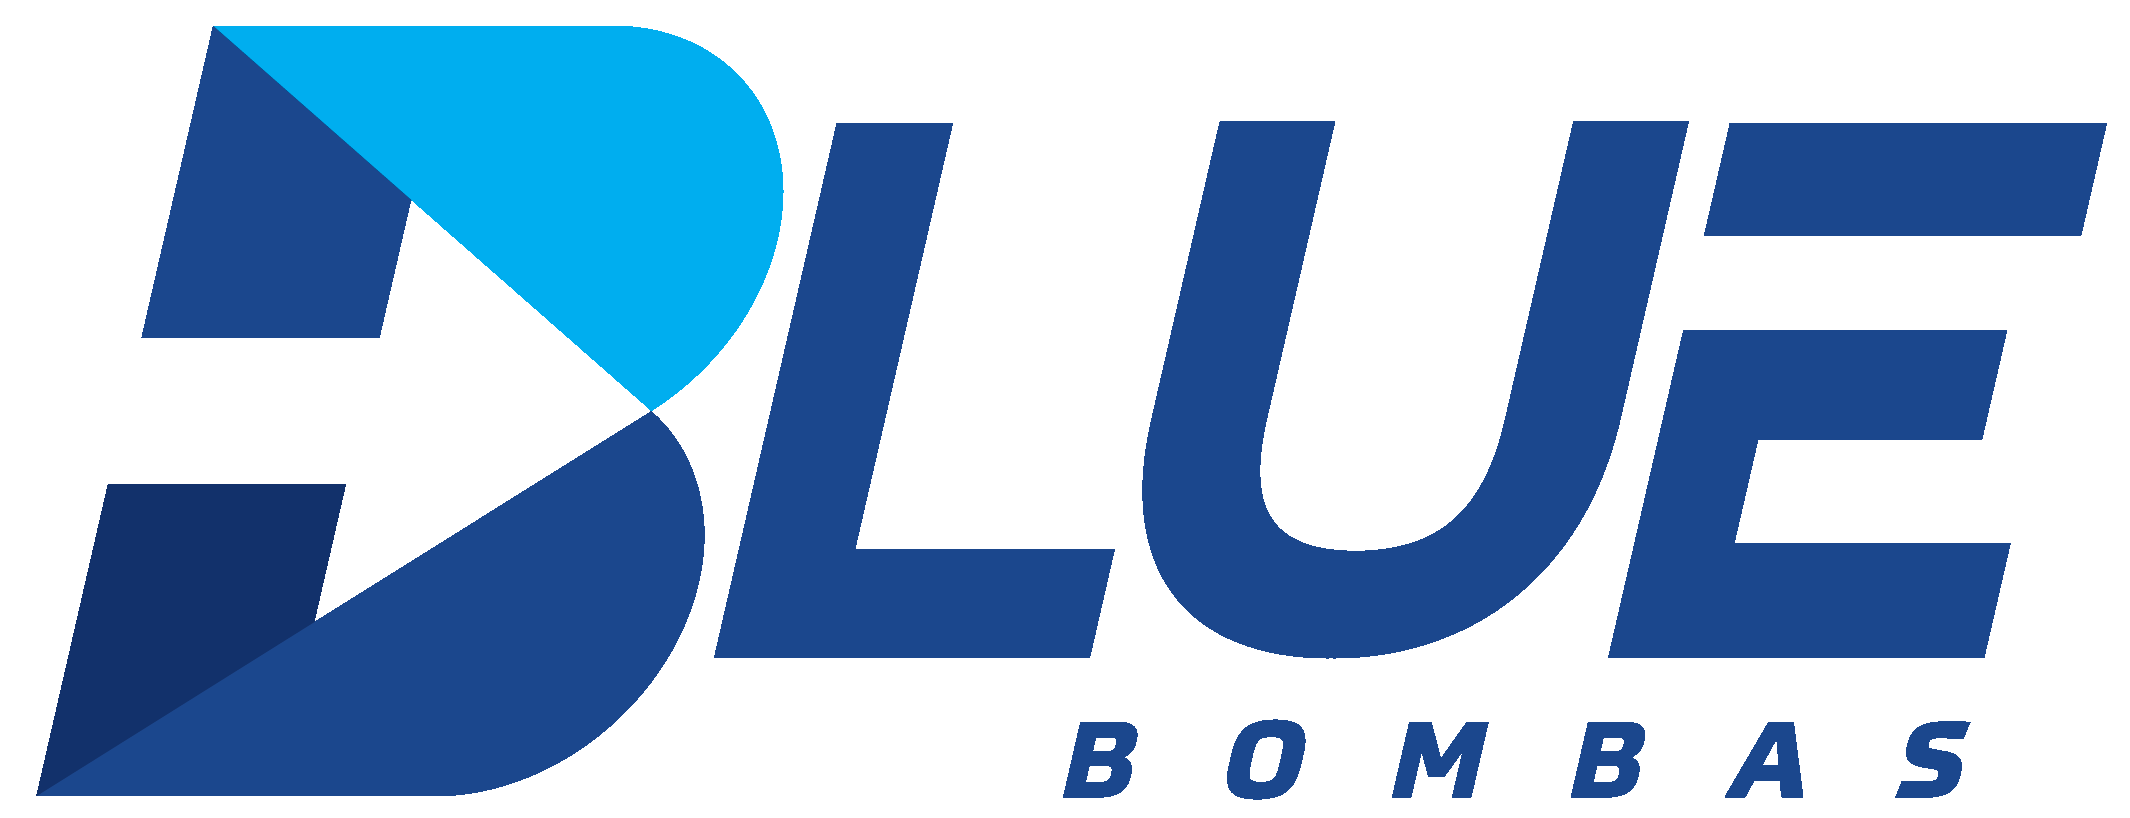 Blue Bombas